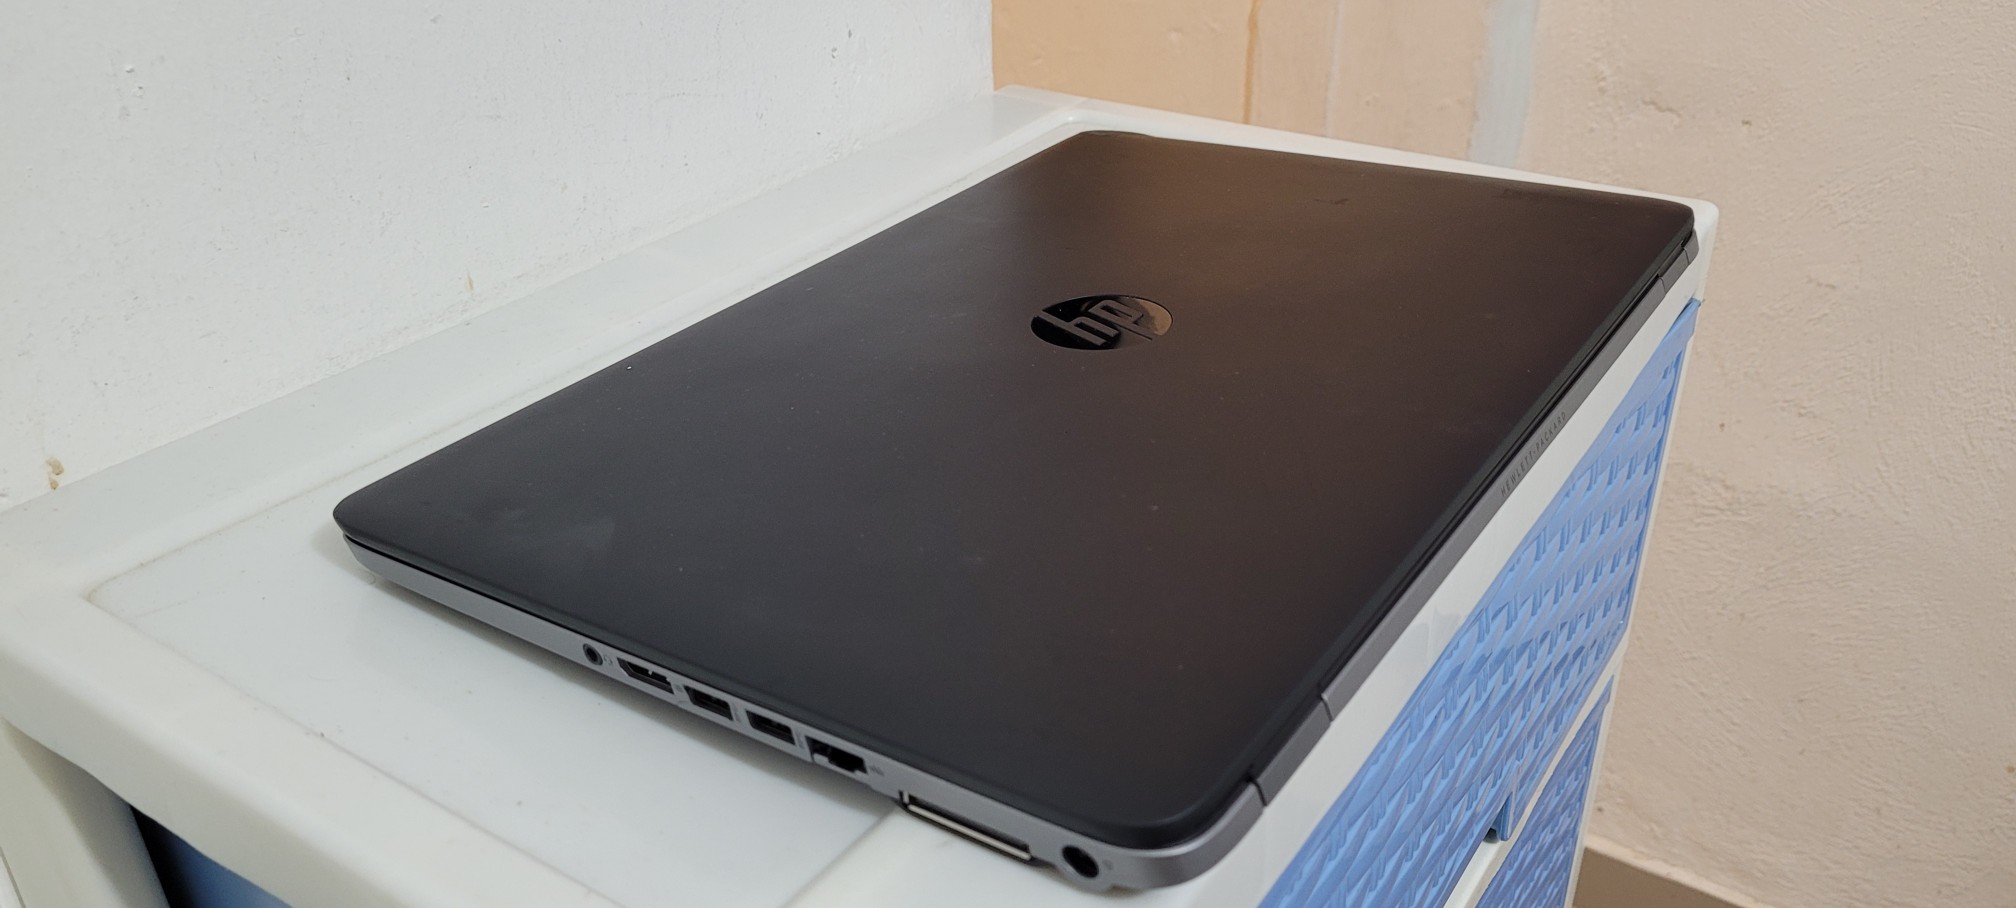 computadoras y laptops - laptop hp 850 17 Pulg Core i7 Ram 16gb Disco 500gb SSD Video 8gb 2